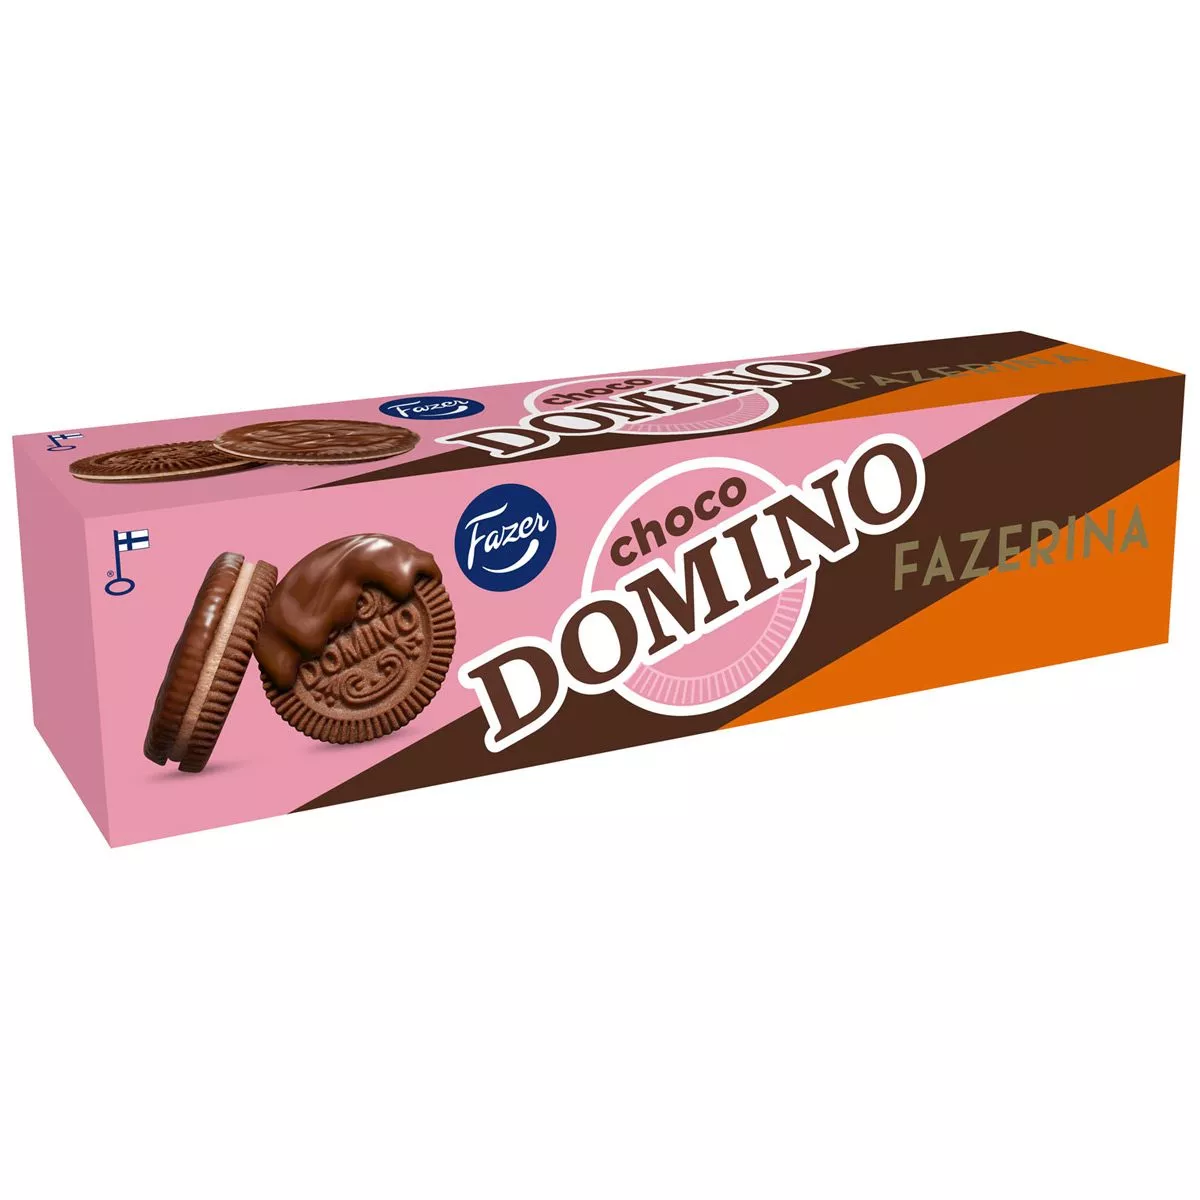 Fazer Domino Choco Fazerina biscuit (180g) 1